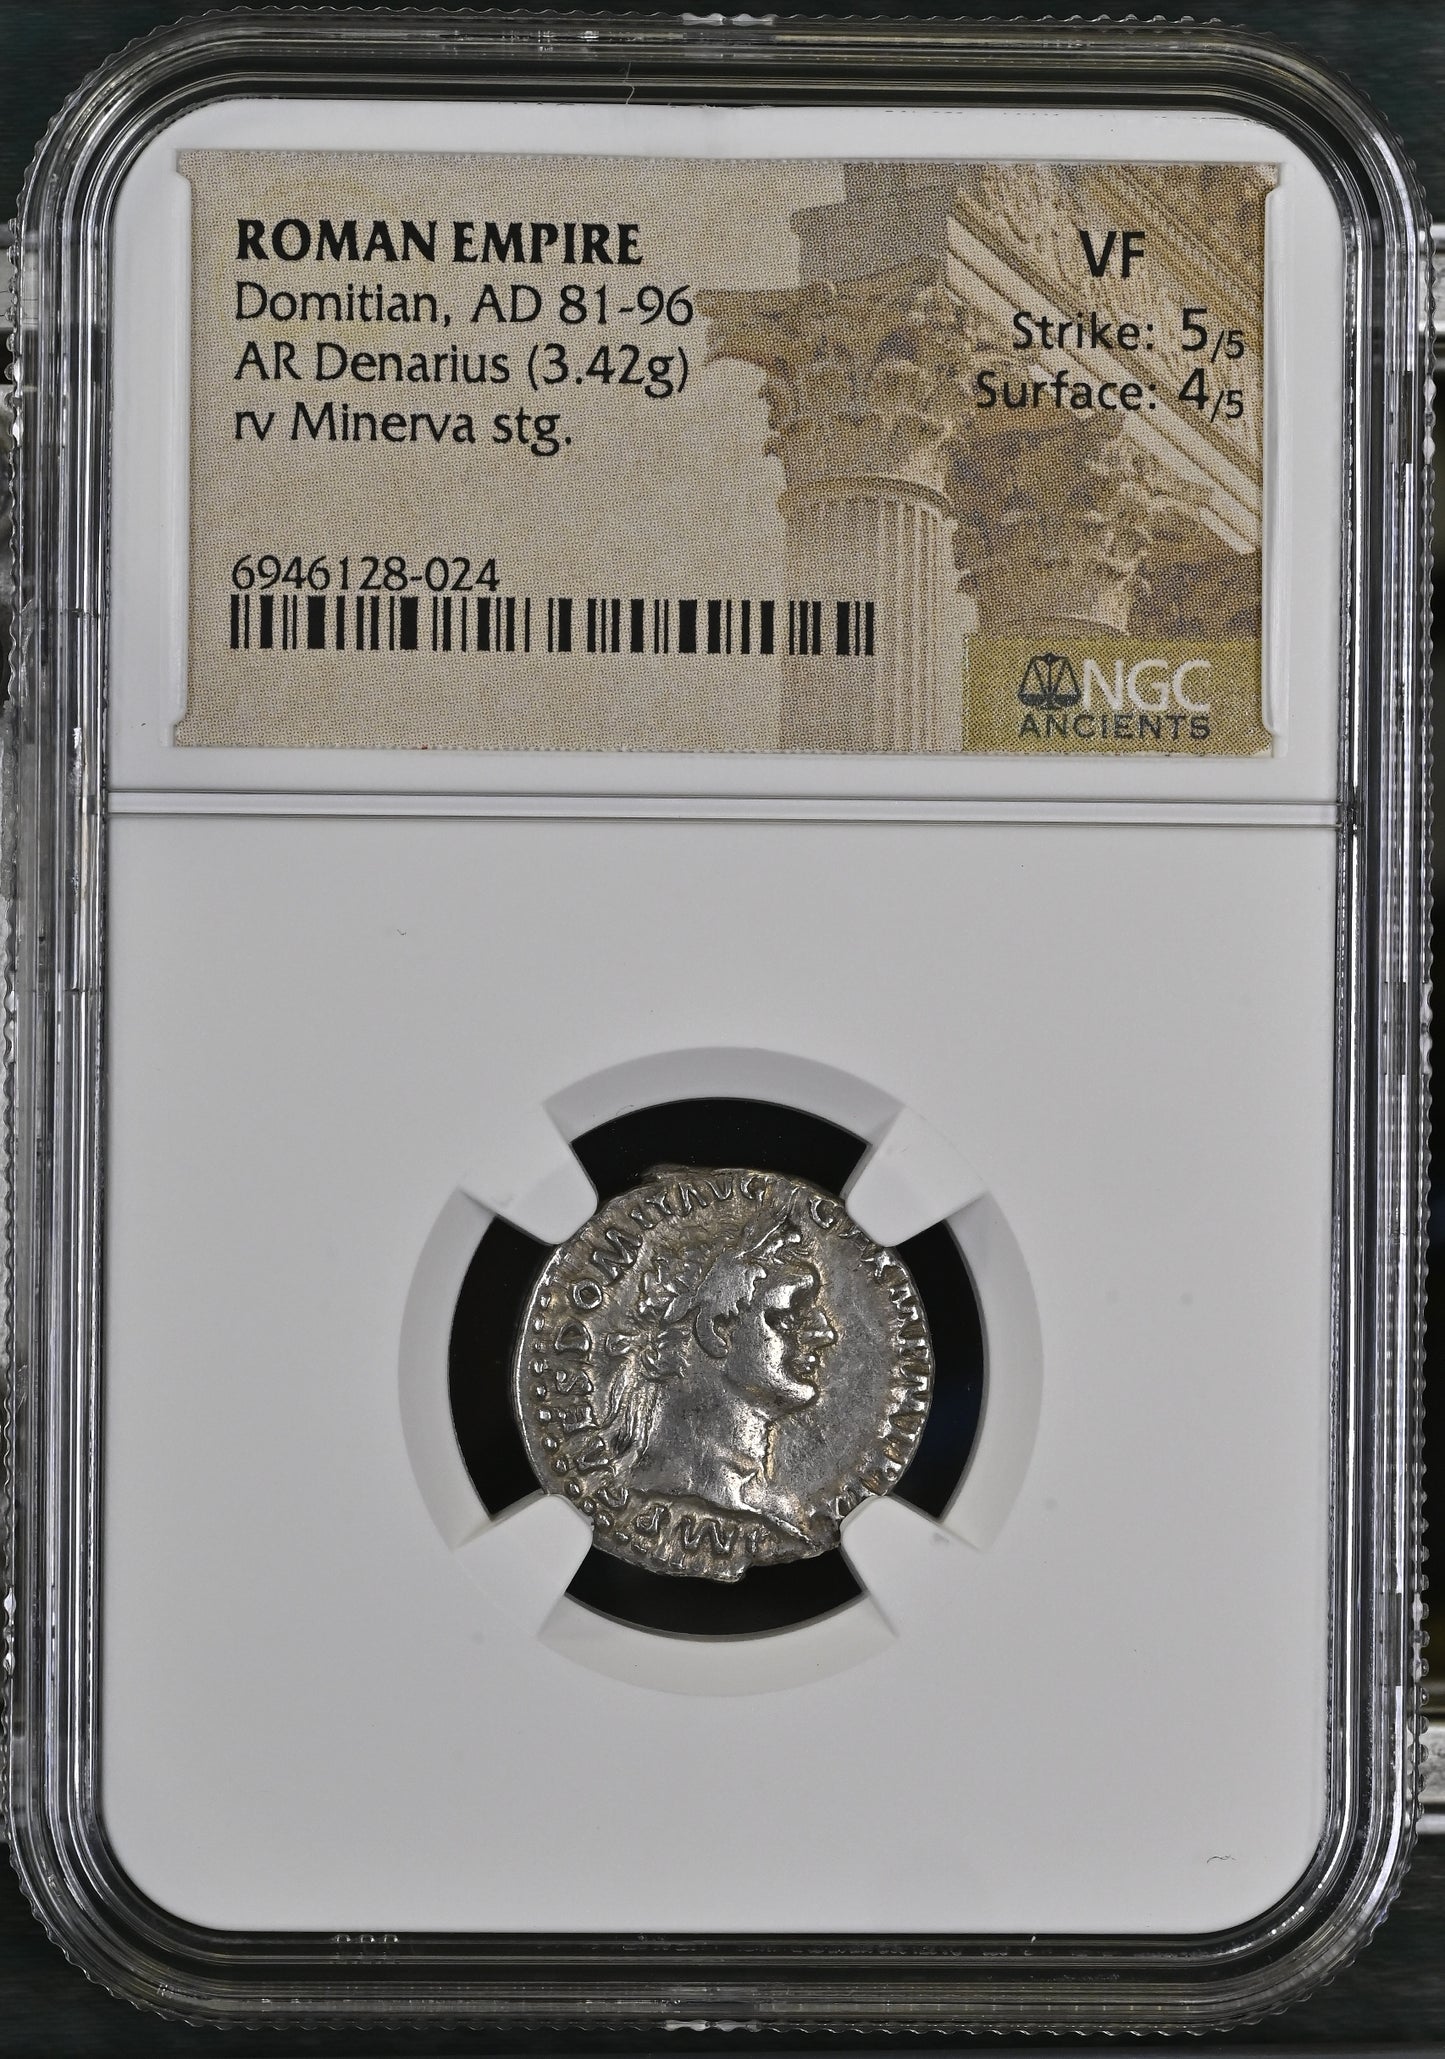 Roman Empire - Domitian - Silver Denarius - NGC VF - RIC:722